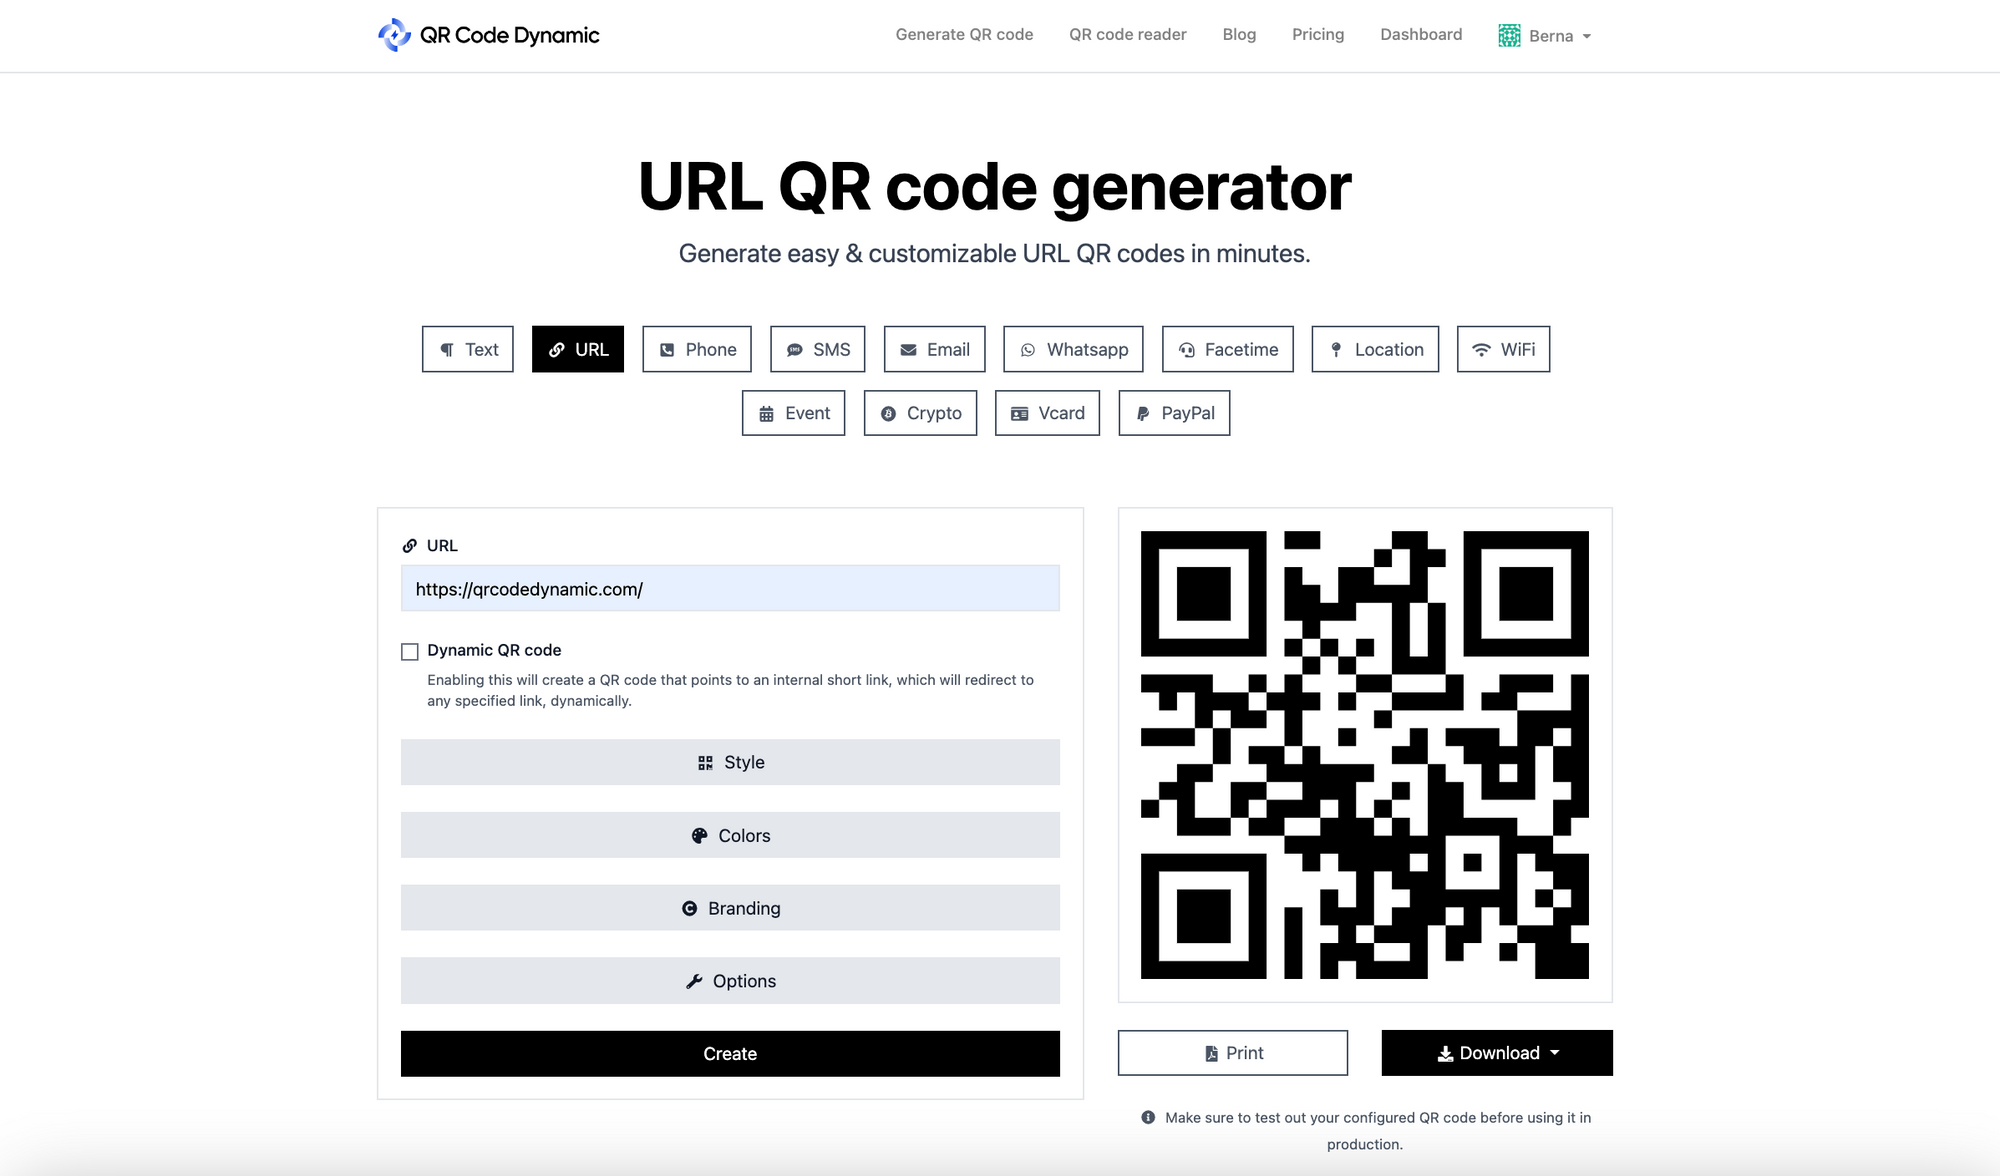 A screenshot of QRCodeDynamic's URL QR code generator